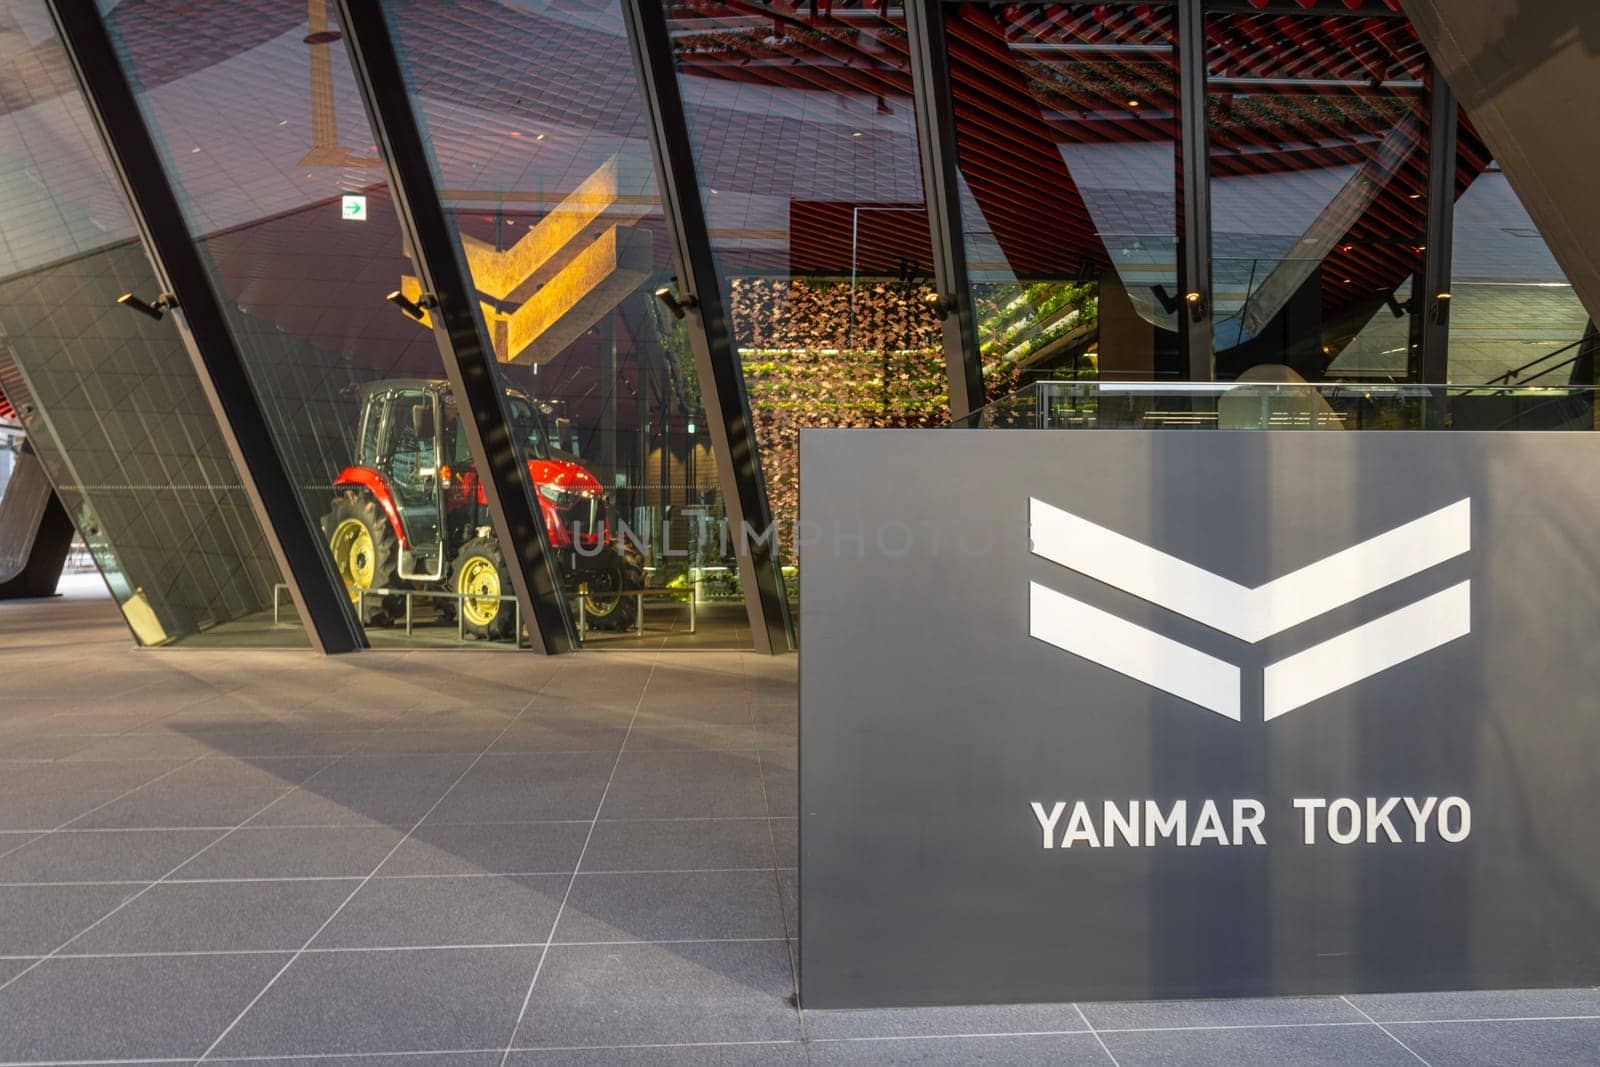 Yanmar brand in Tokyo, Japan by sergiodv